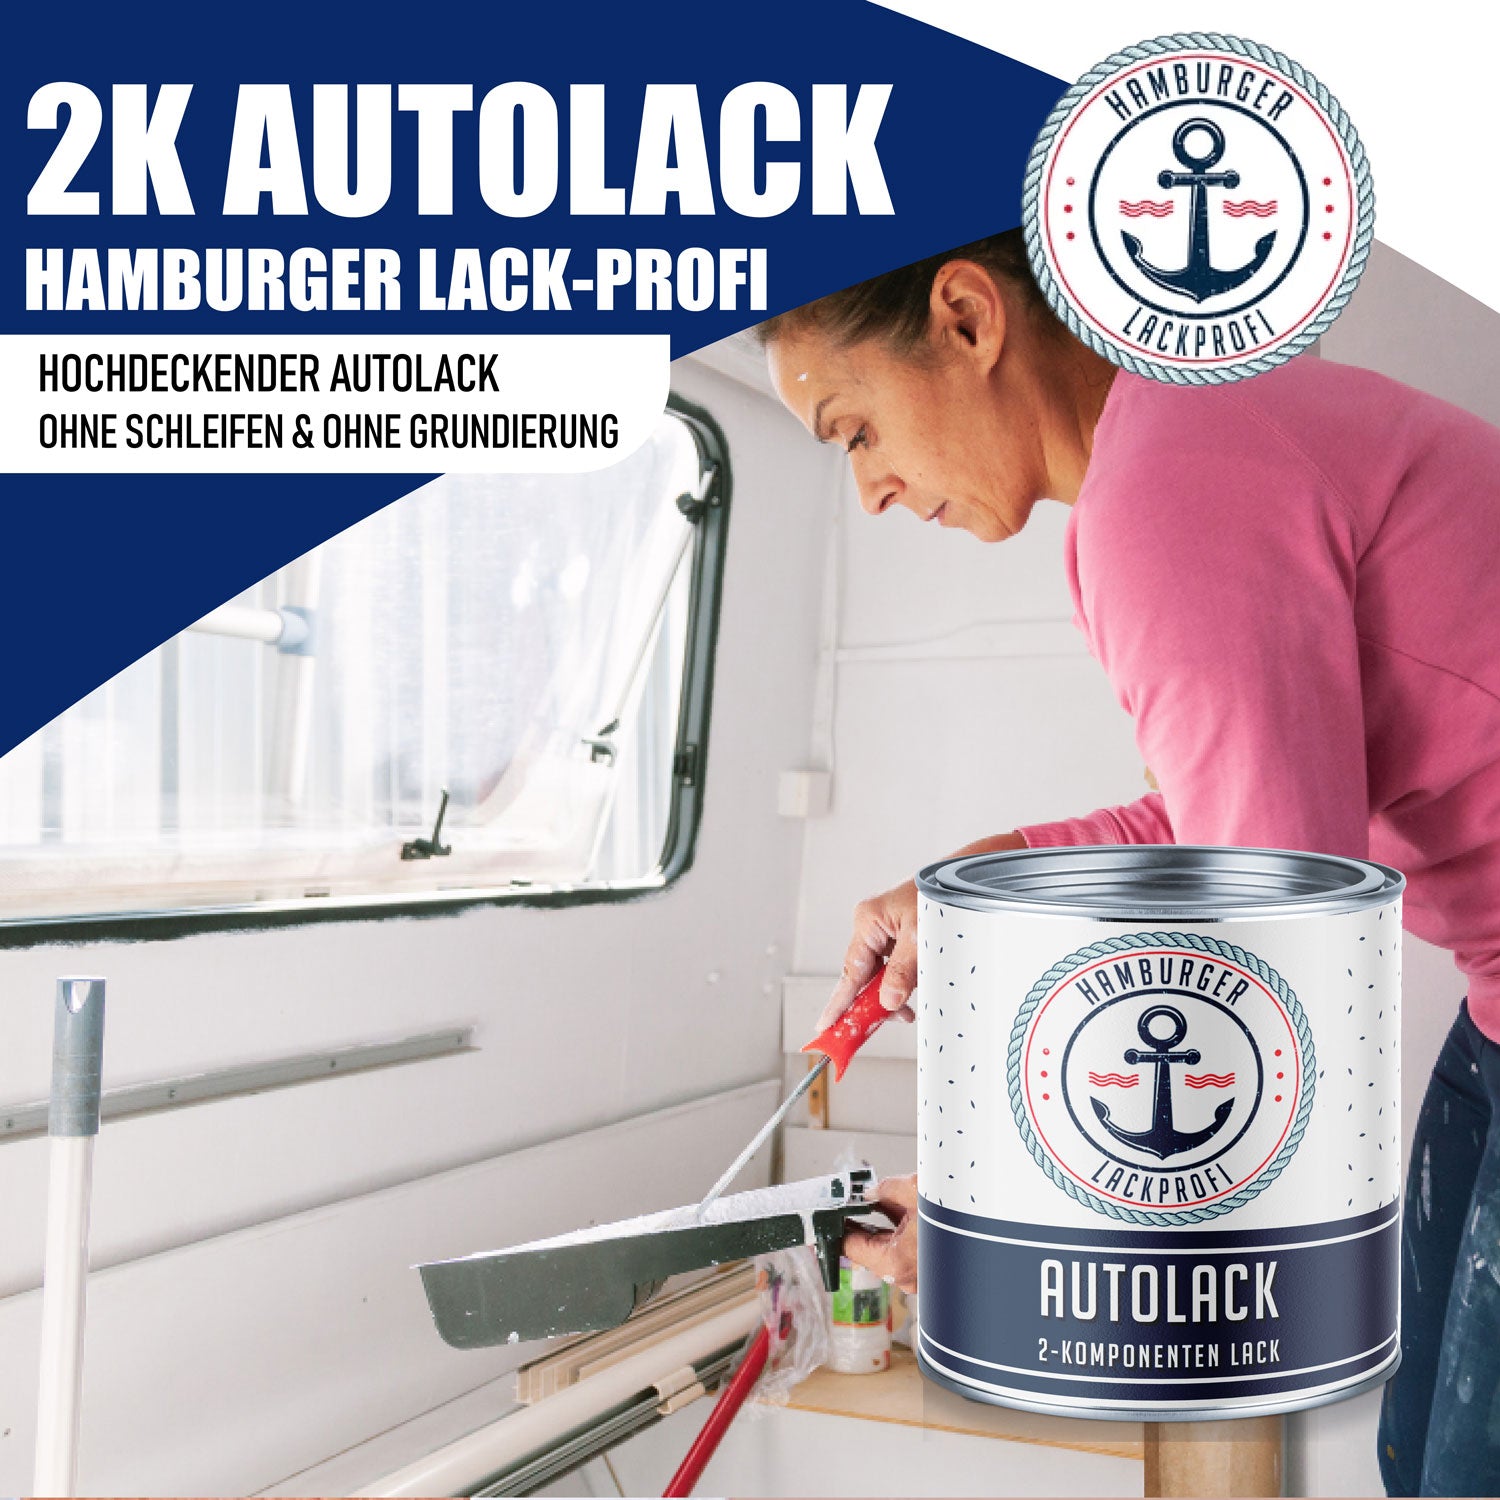 Hamburger Lack-Profi 2K Autolack in Grauoliv RAL 6006 mit Lackierset (X300) & Verdünnung (1 L) - 30% Sparangebot